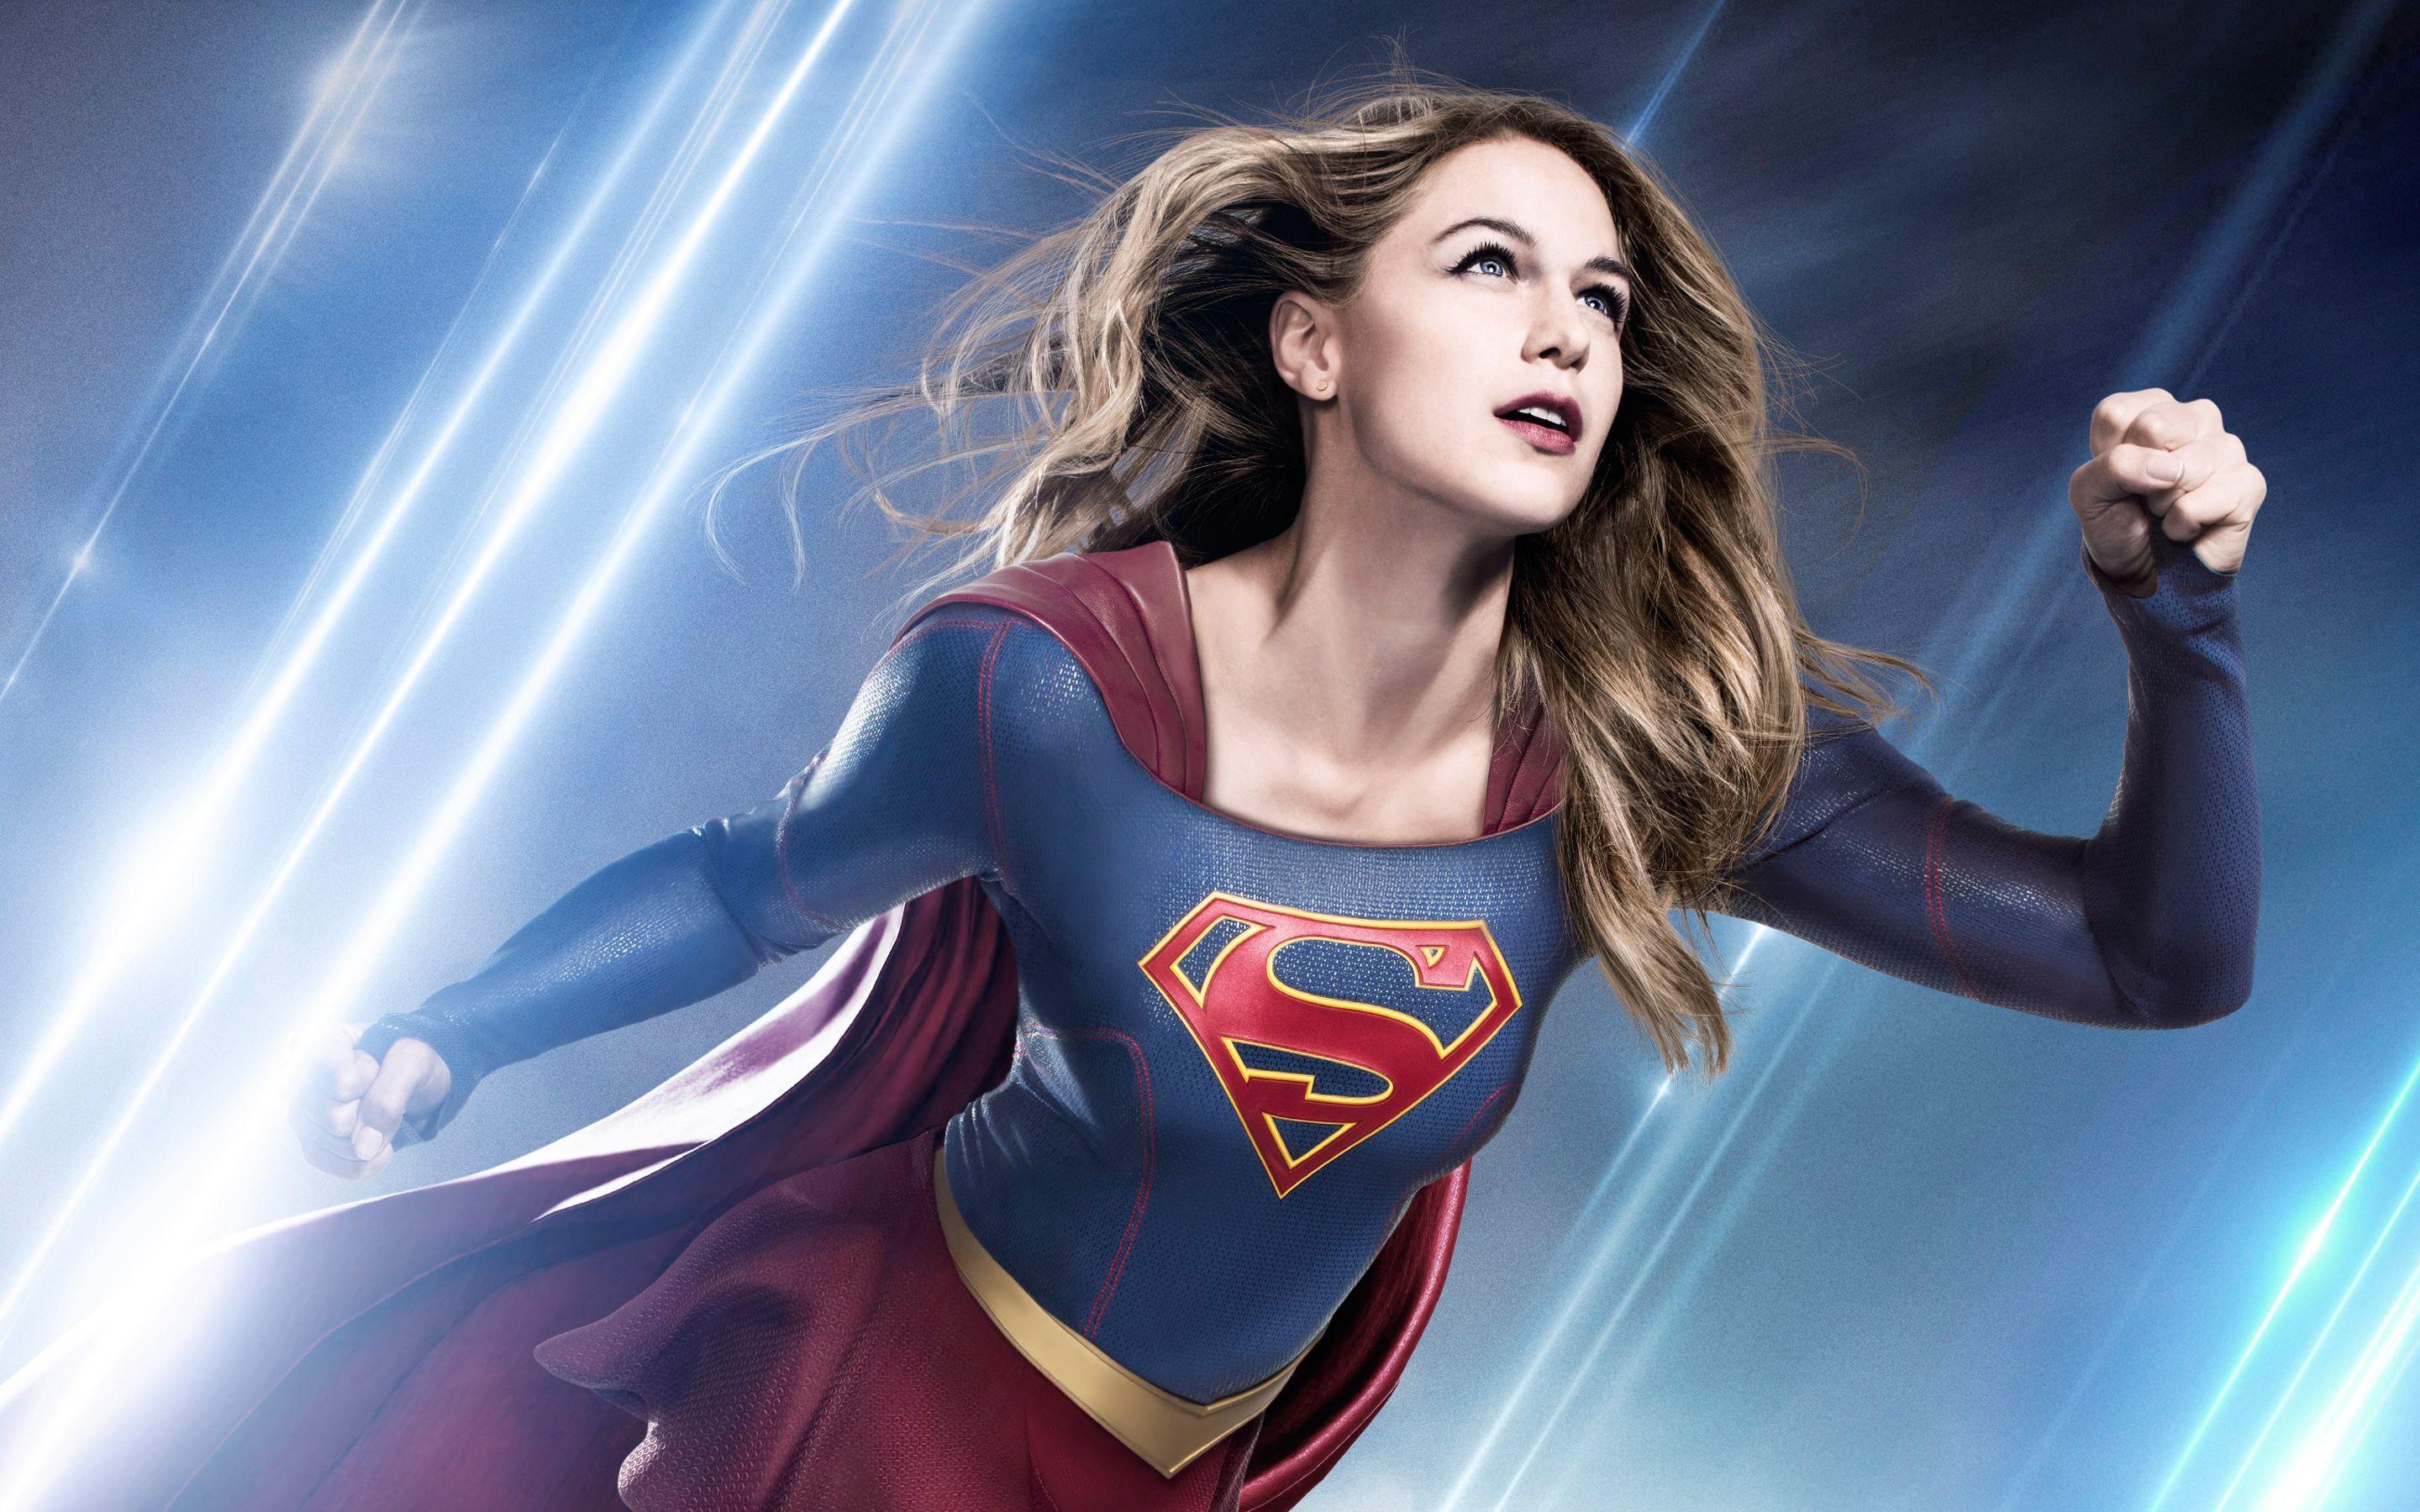 supergirl season 3 HD wallpaper. SUPERGIRL / CW shows